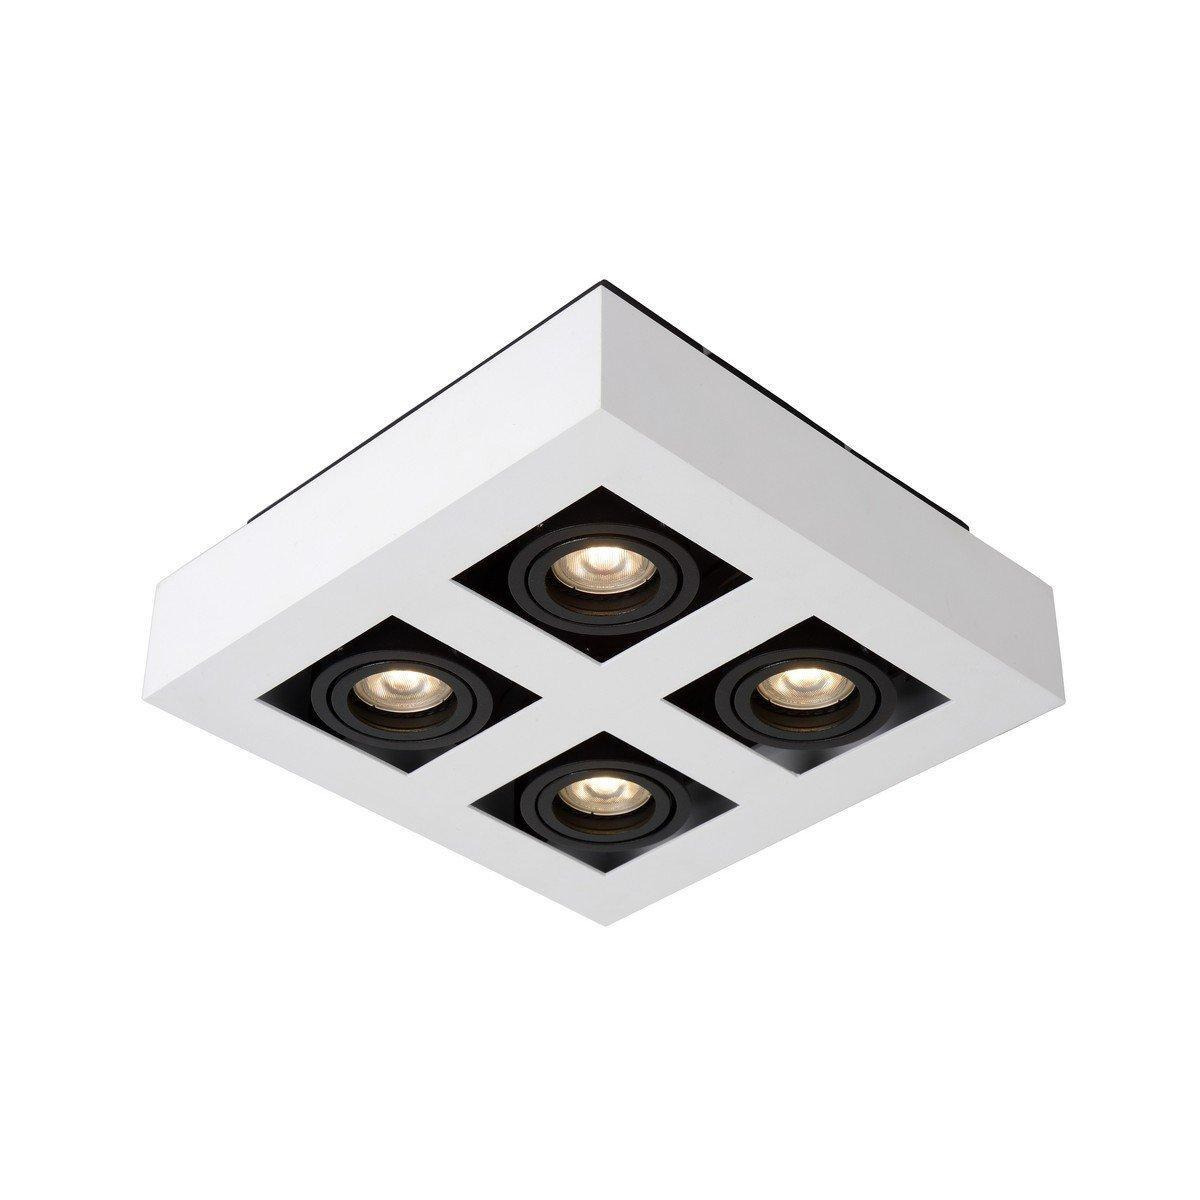 Lucide Xirax Modern Ceiling Spotlight LED Dim to warm GU10 4x5W 2200K3000K White - image 1